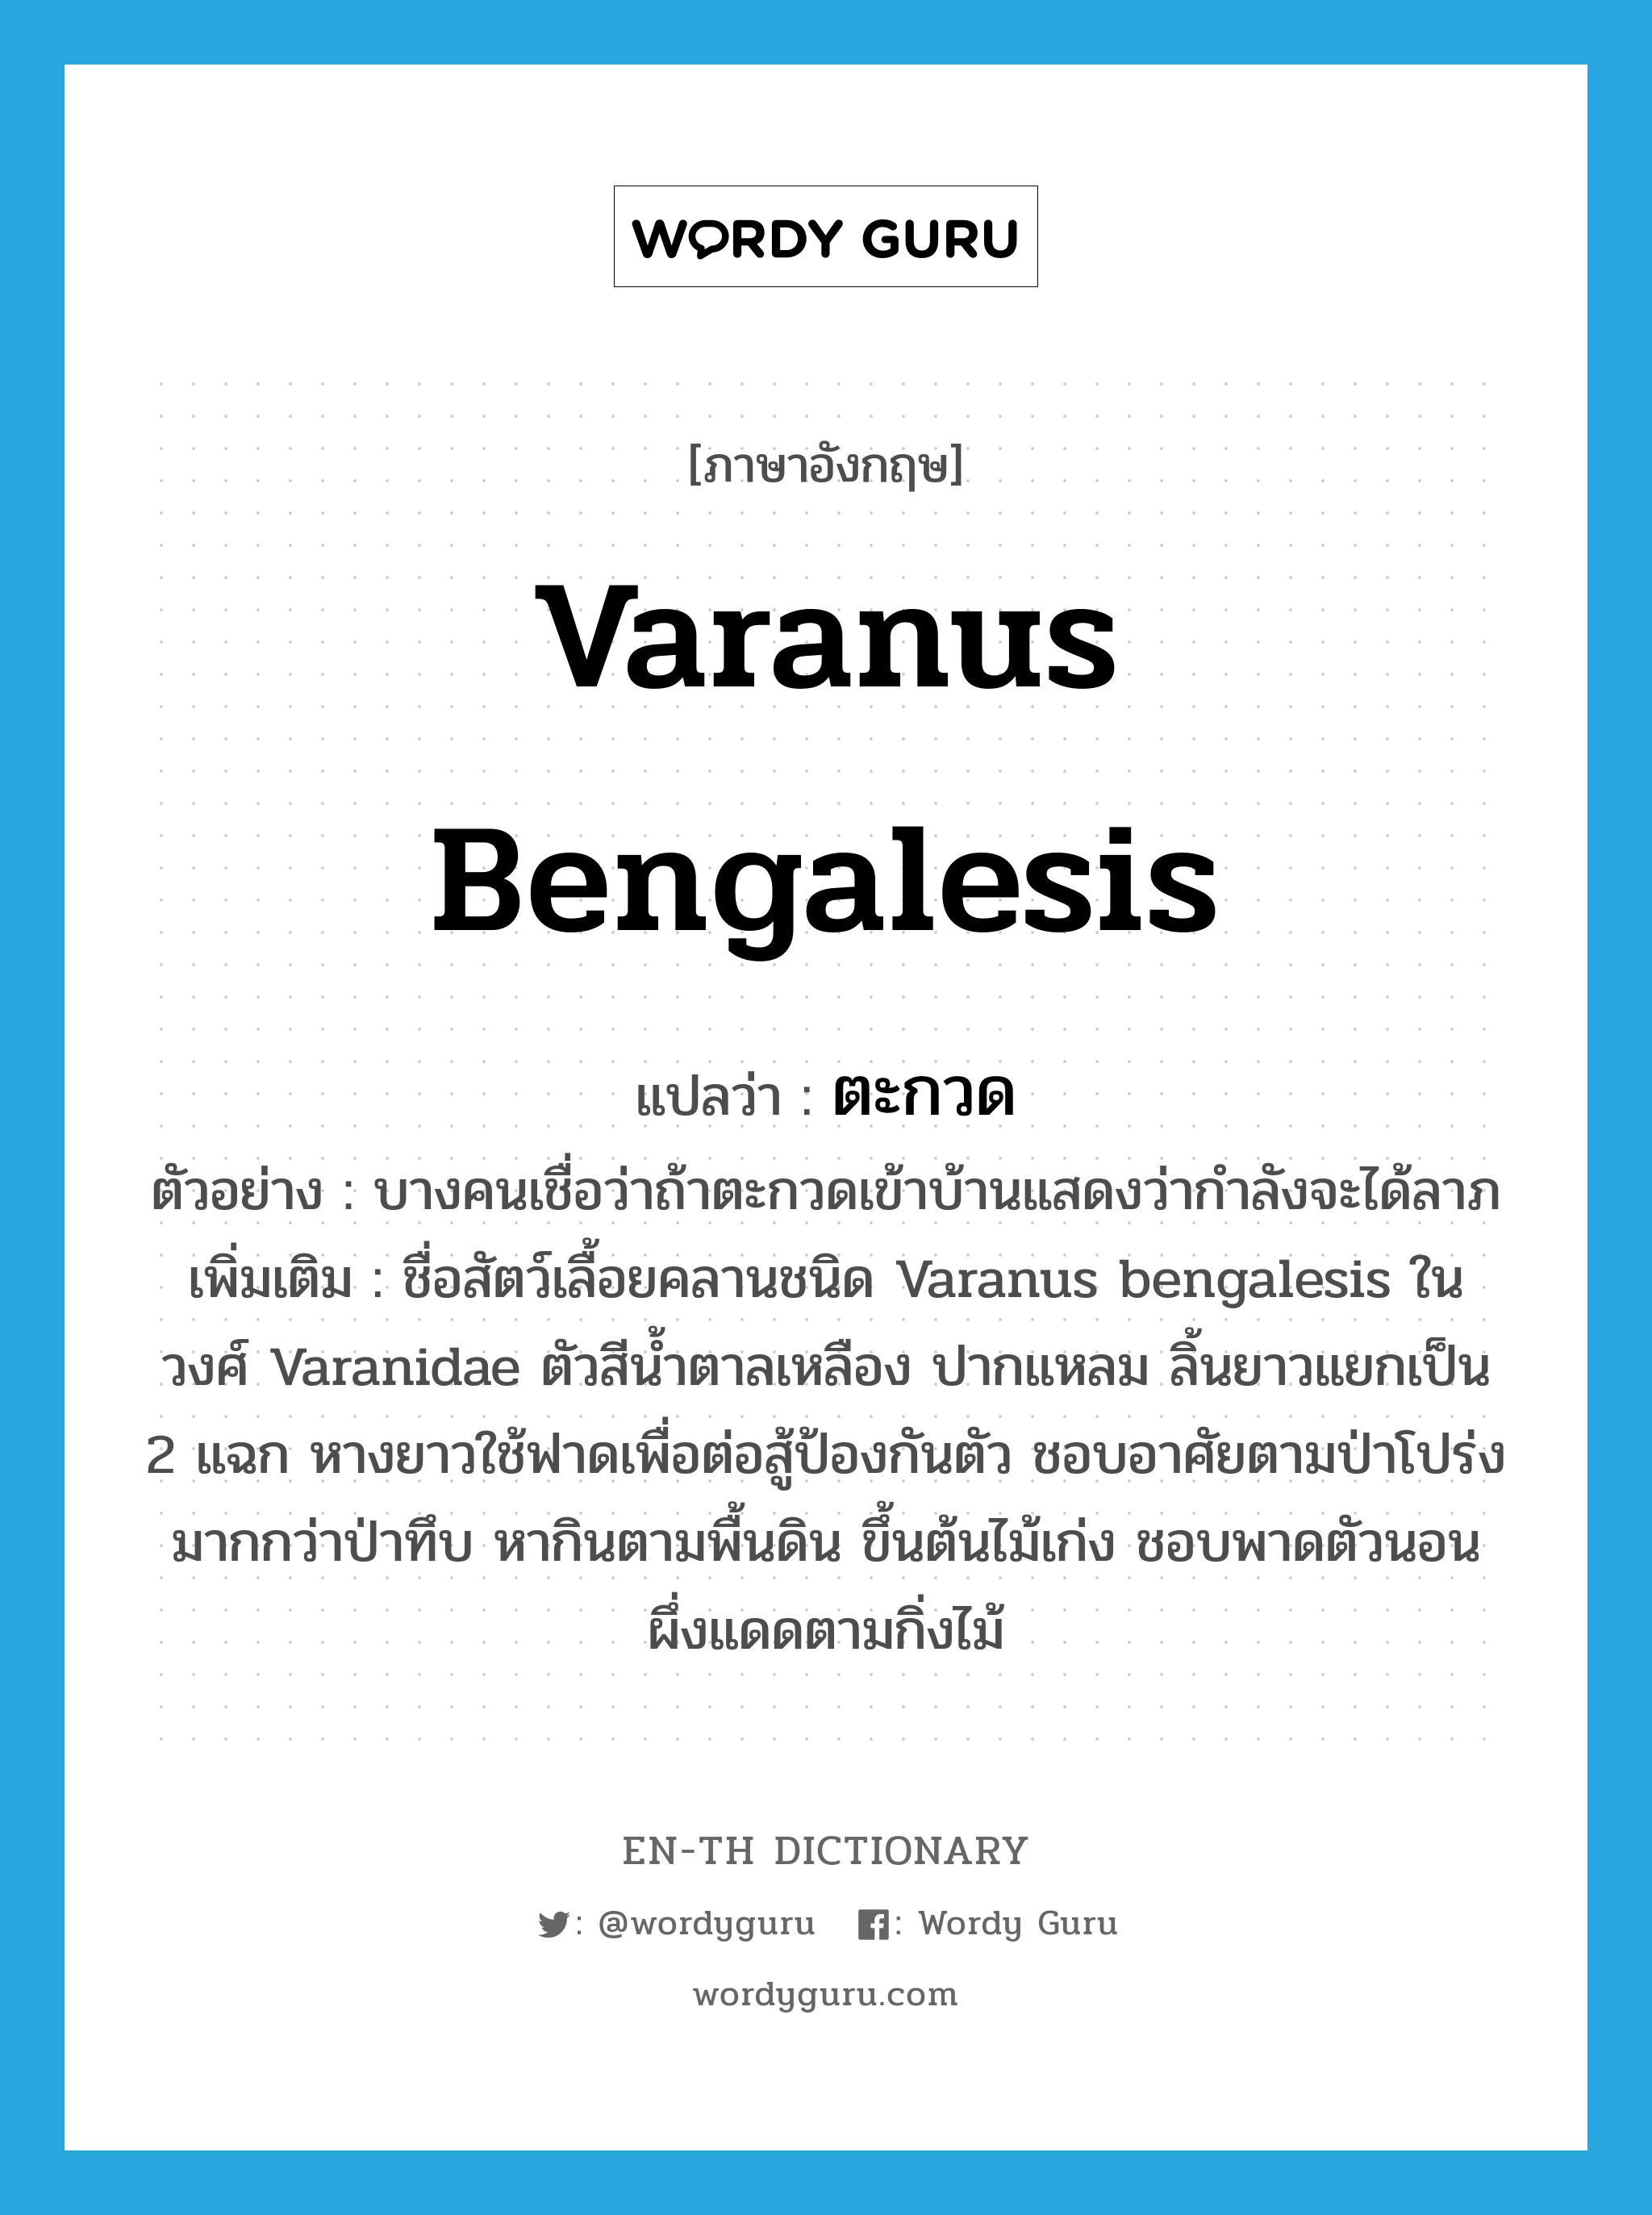 Varanus bengalesis แปลว่า?, คำศัพท์ภาษาอังกฤษ Varanus bengalesis แปลว่า ตะกวด ประเภท N ตัวอย่าง บางคนเชื่อว่าถ้าตะกวดเข้าบ้านแสดงว่ากำลังจะได้ลาภ เพิ่มเติม ชื่อสัตว์เลื้อยคลานชนิด Varanus bengalesis ในวงศ์ Varanidae ตัวสีน้ำตาลเหลือง ปากแหลม ลิ้นยาวแยกเป็น 2 แฉก หางยาวใช้ฟาดเพื่อต่อสู้ป้องกันตัว ชอบอาศัยตามป่าโปร่งมากกว่าป่าทึบ หากินตามพื้นดิน ขึ้นต้นไม้เก่ง ชอบพาดตัวนอนผึ่งแดดตามกิ่งไม้ หมวด N